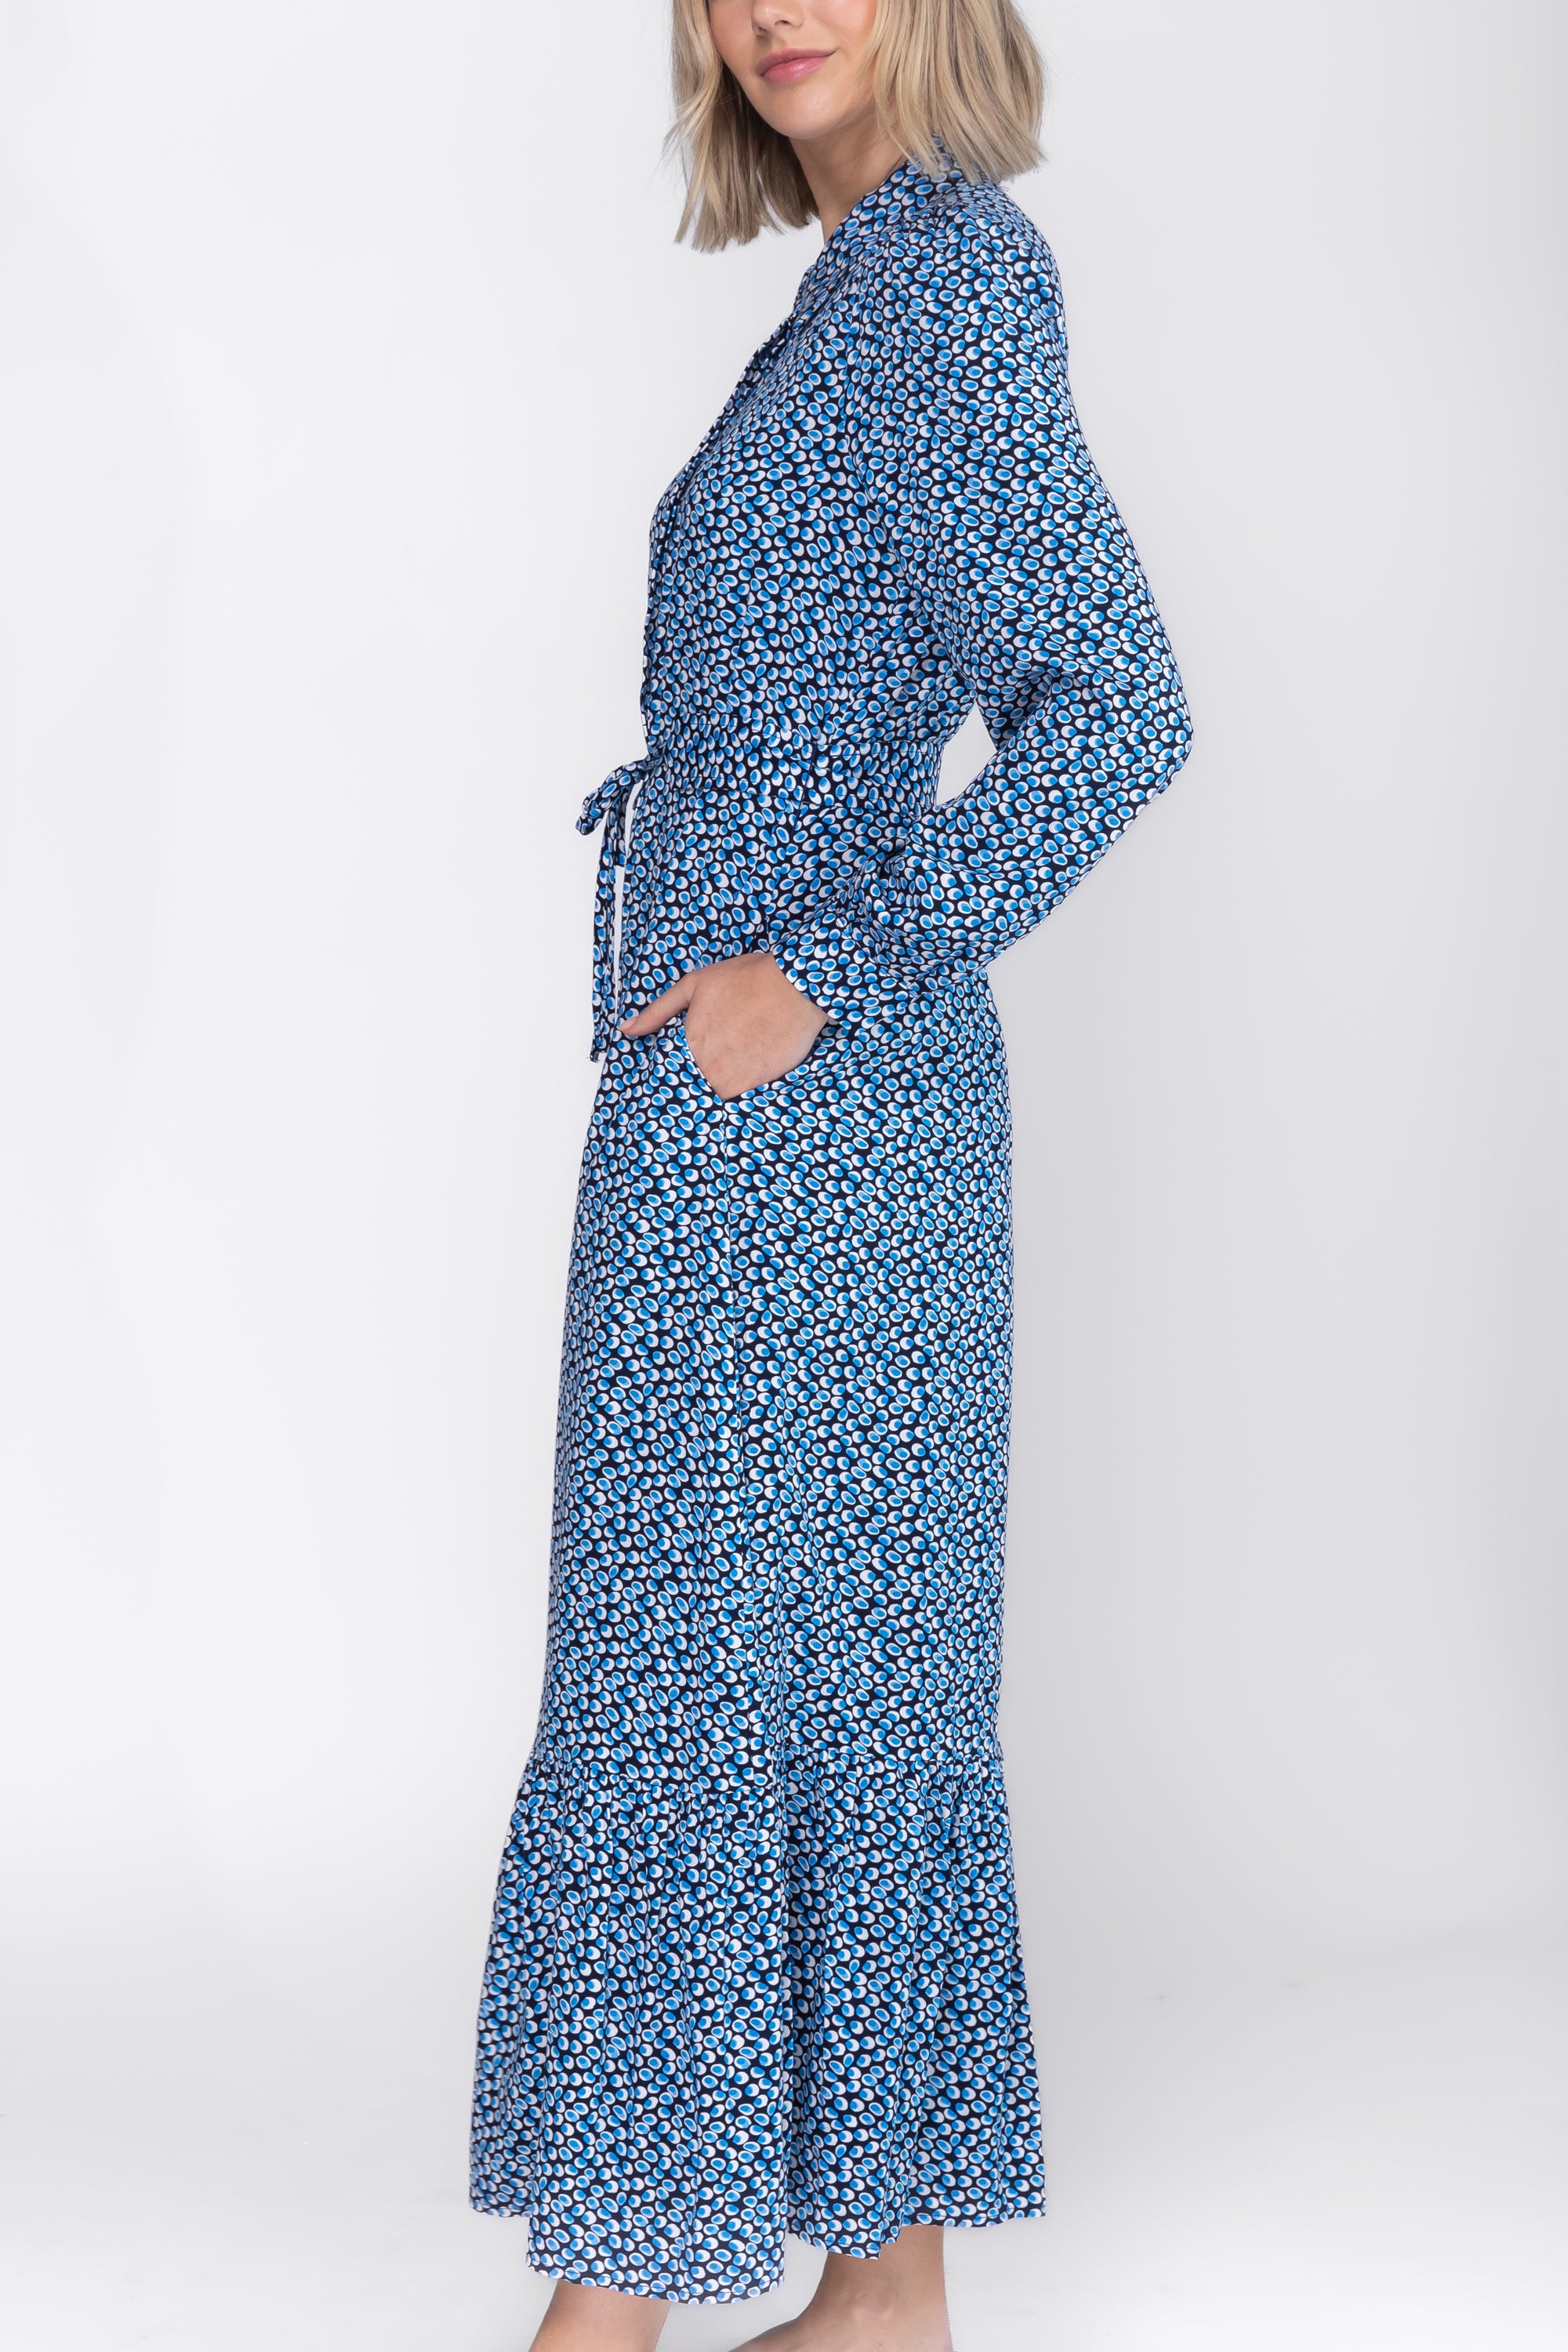 LEXI DRESS (BLUE/NAVY)